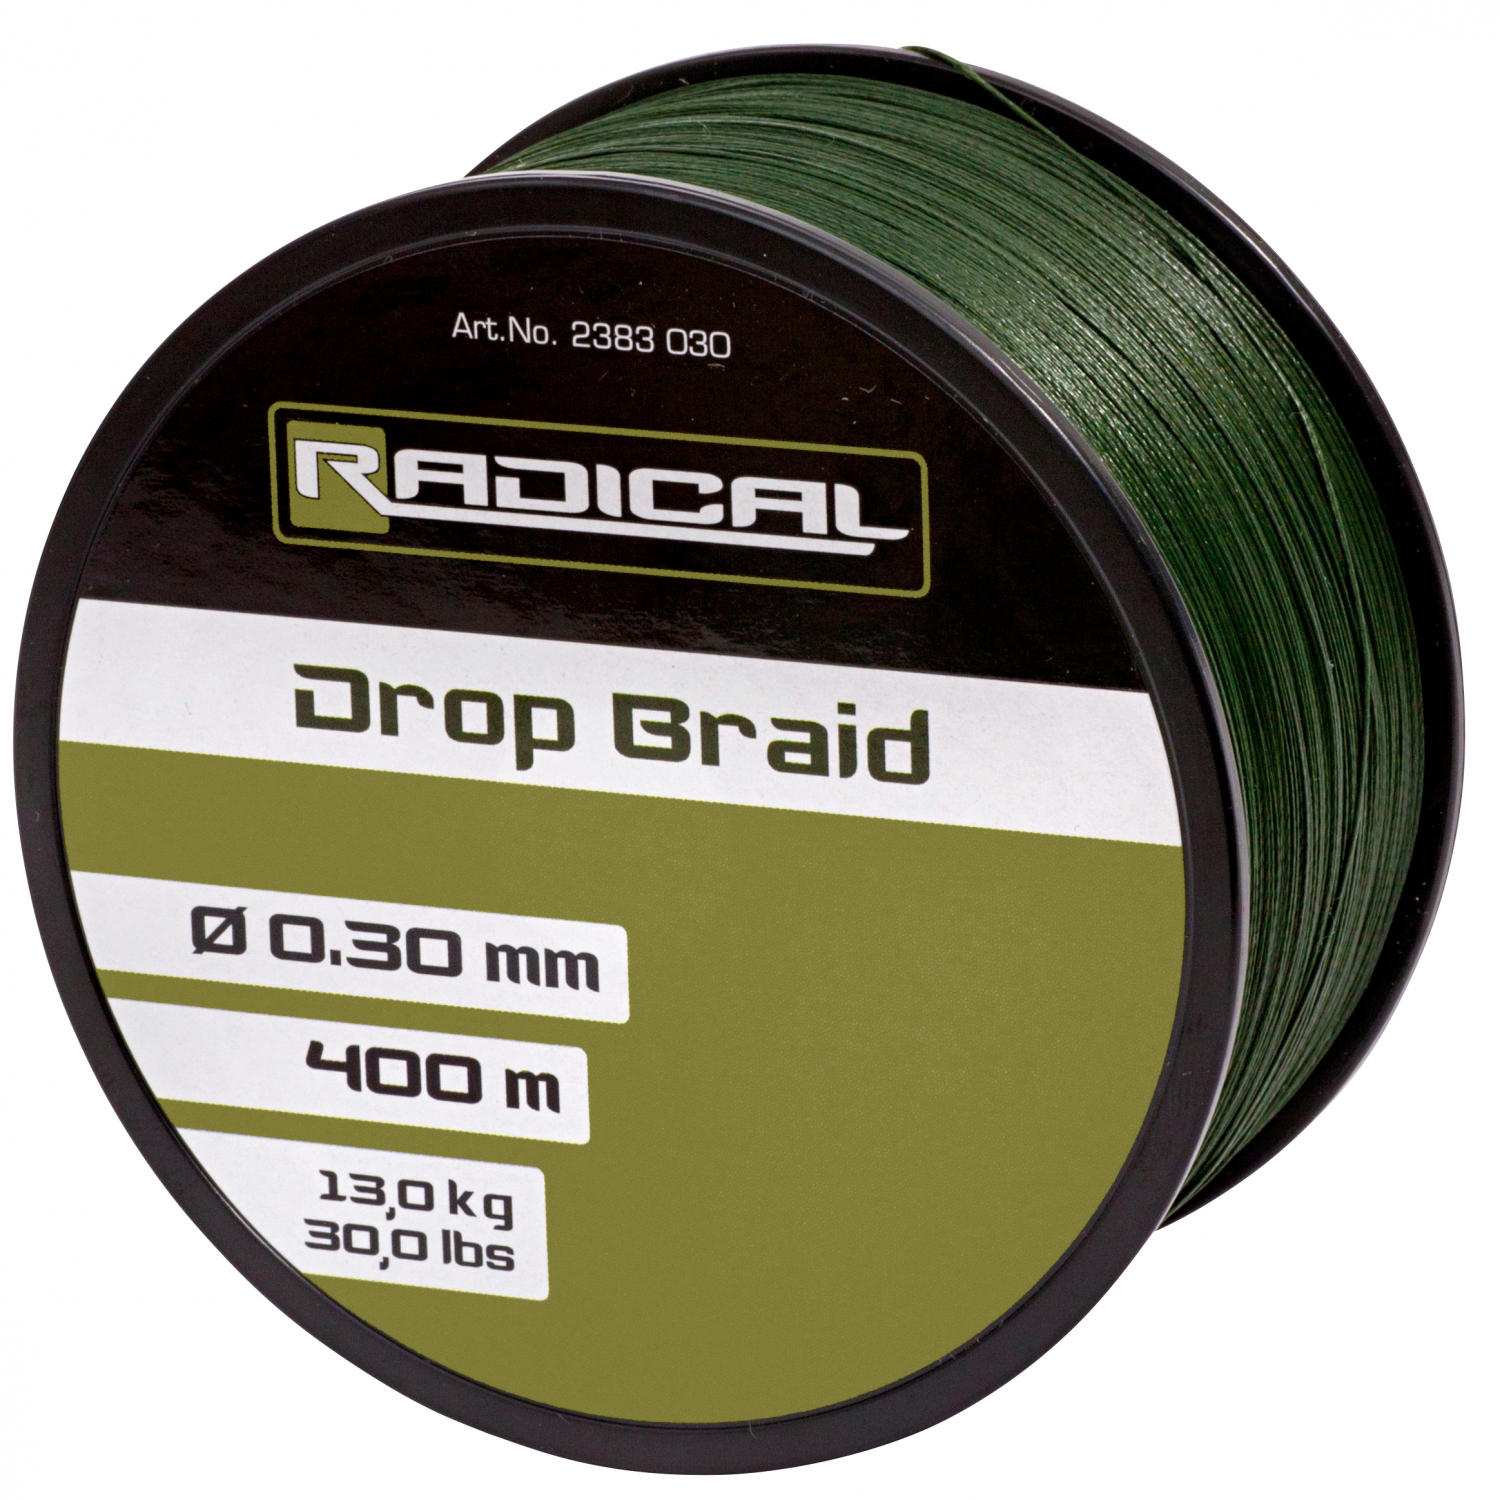 Quantum Radical Fishing Line Radical Drop Braid (dark green) at